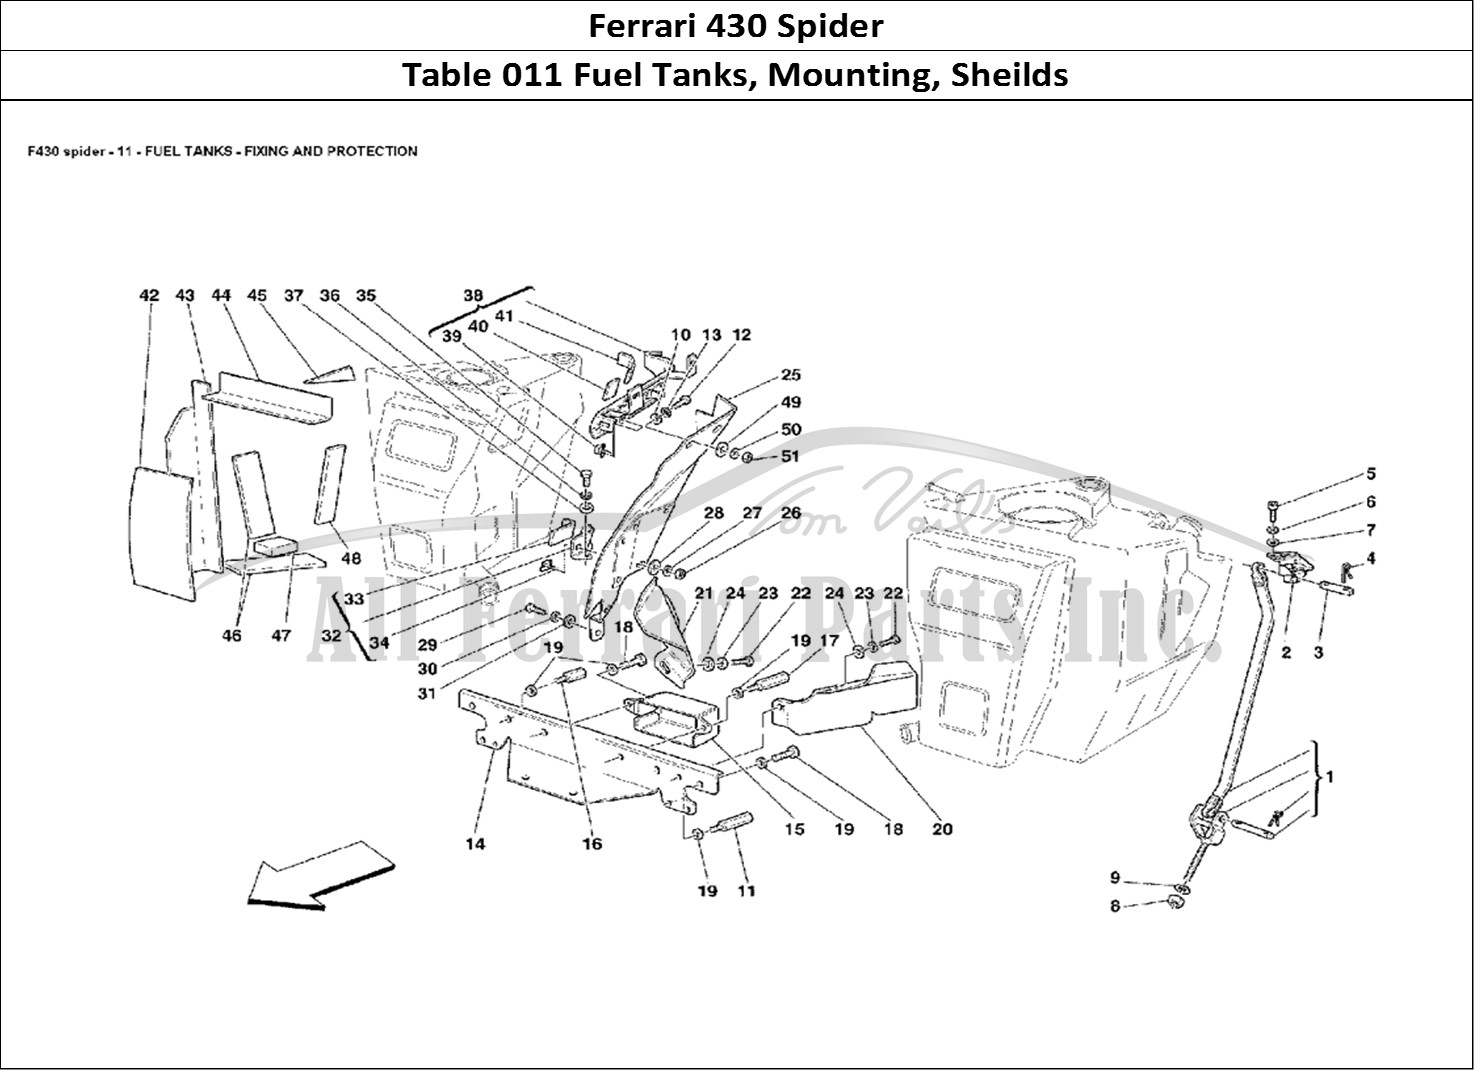 Ferrari Parts Ferrari 430 Spider Page 011 Fuel Tanks - Fixing and P